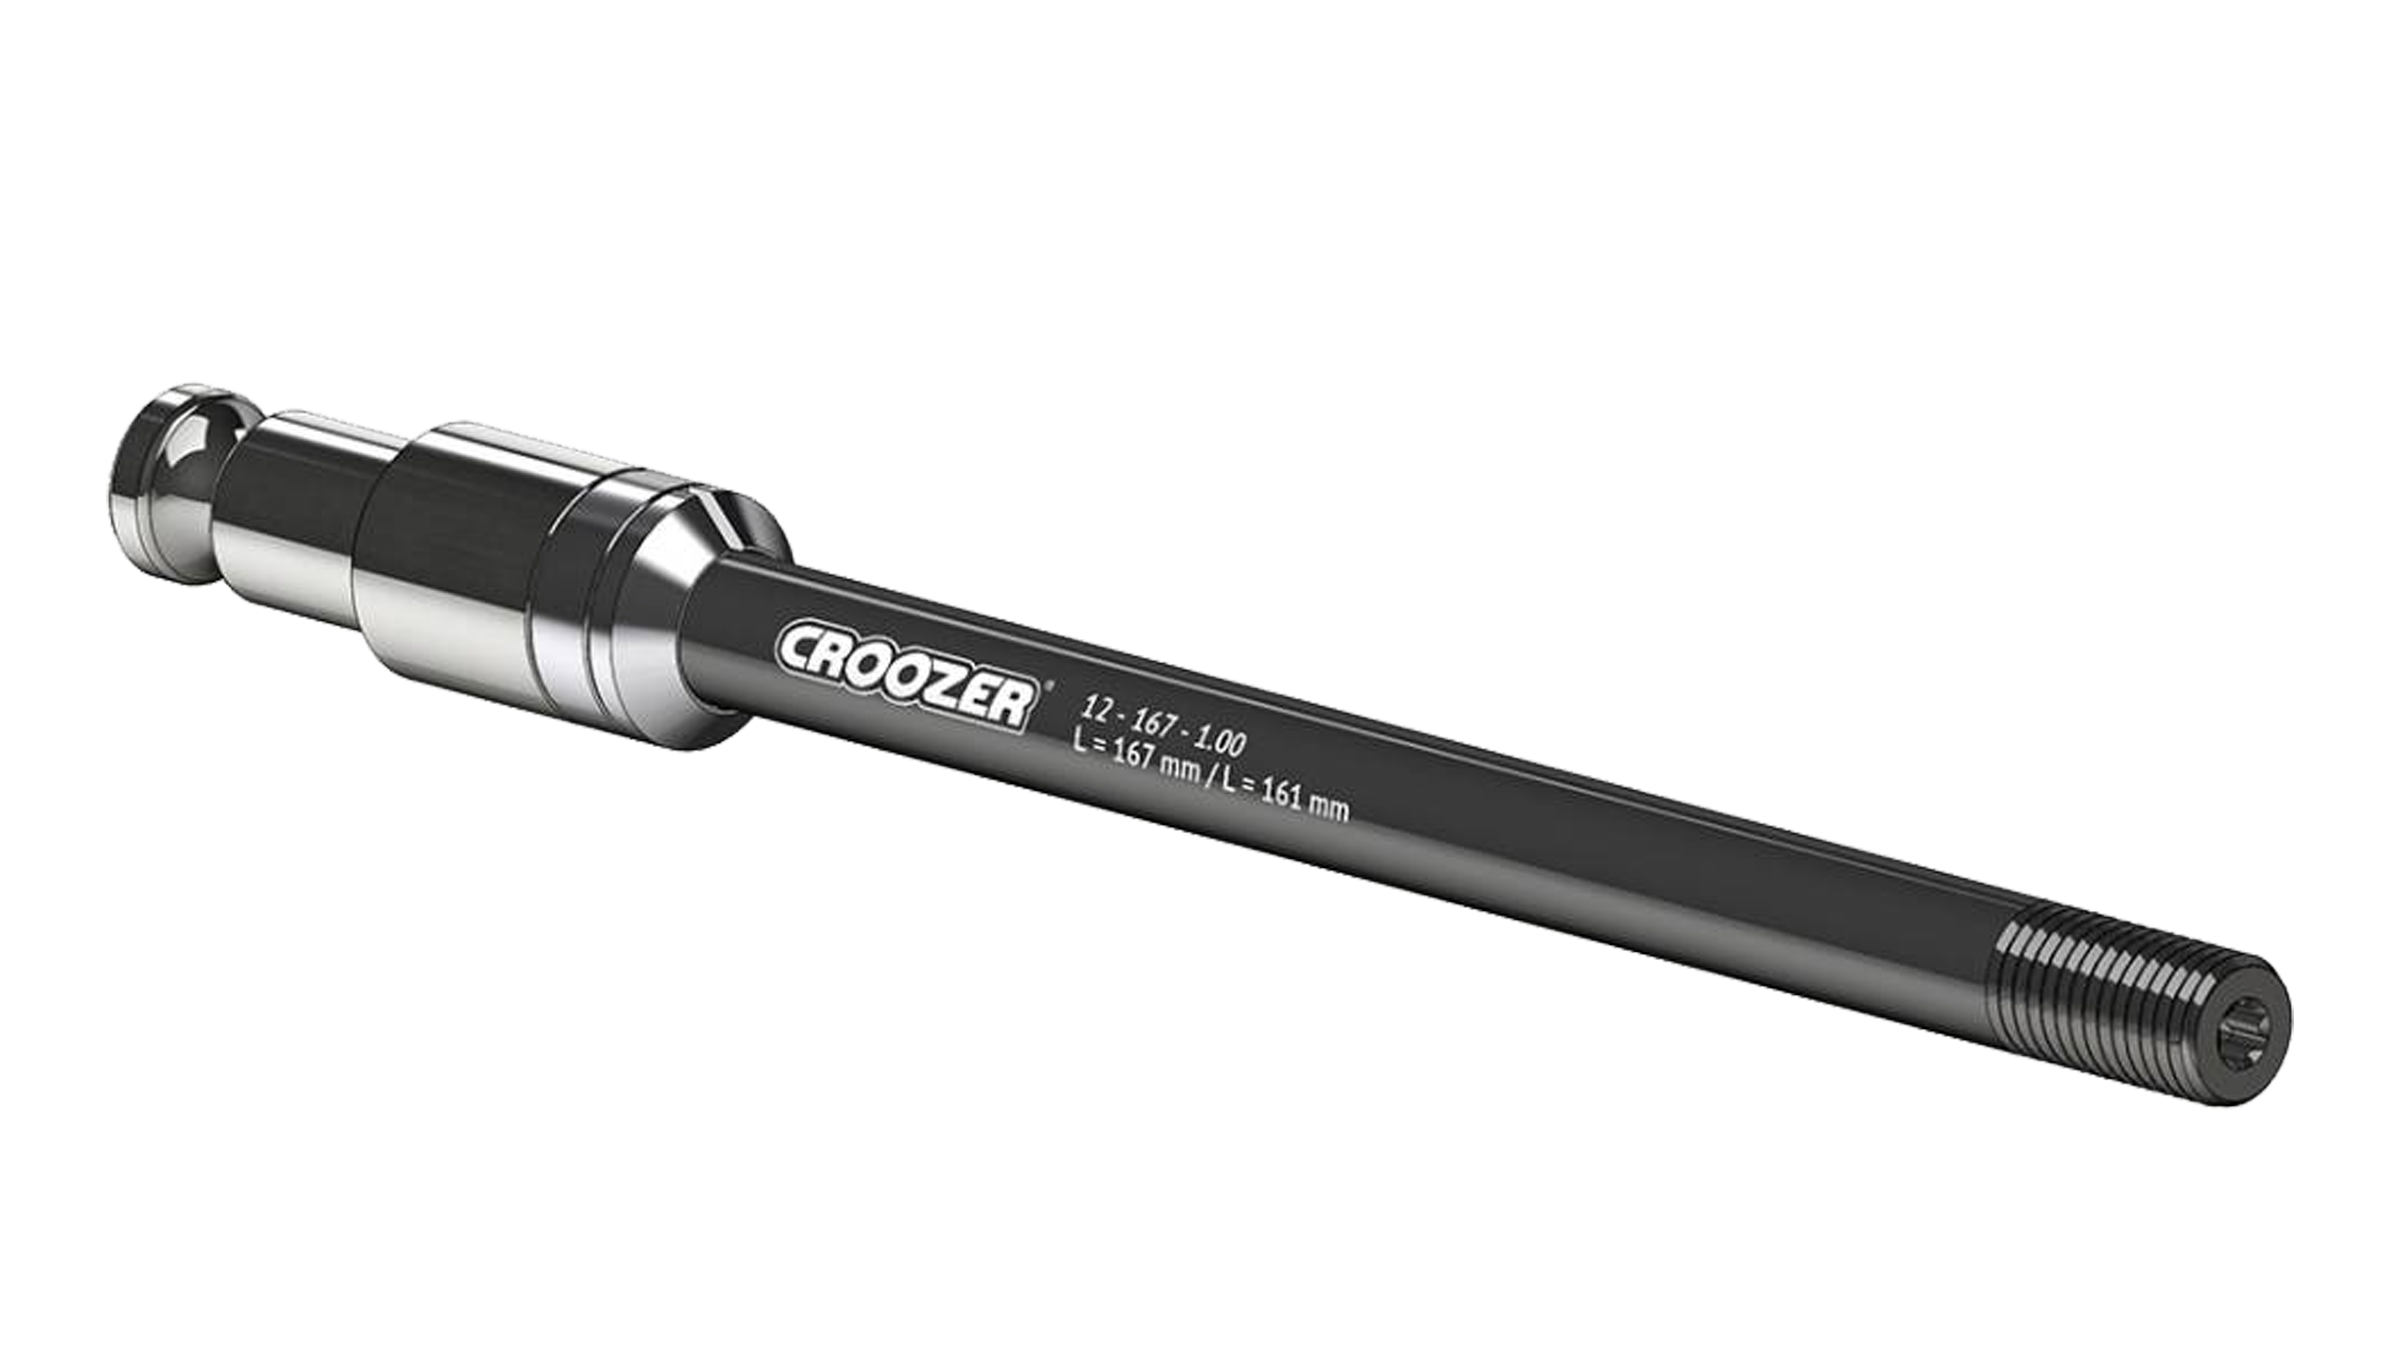 Compatibel met Integreren Bourgondië Croozer Click & Crooz 12-167 XL Thru Axle With Integrated Hitch | CANYON NL